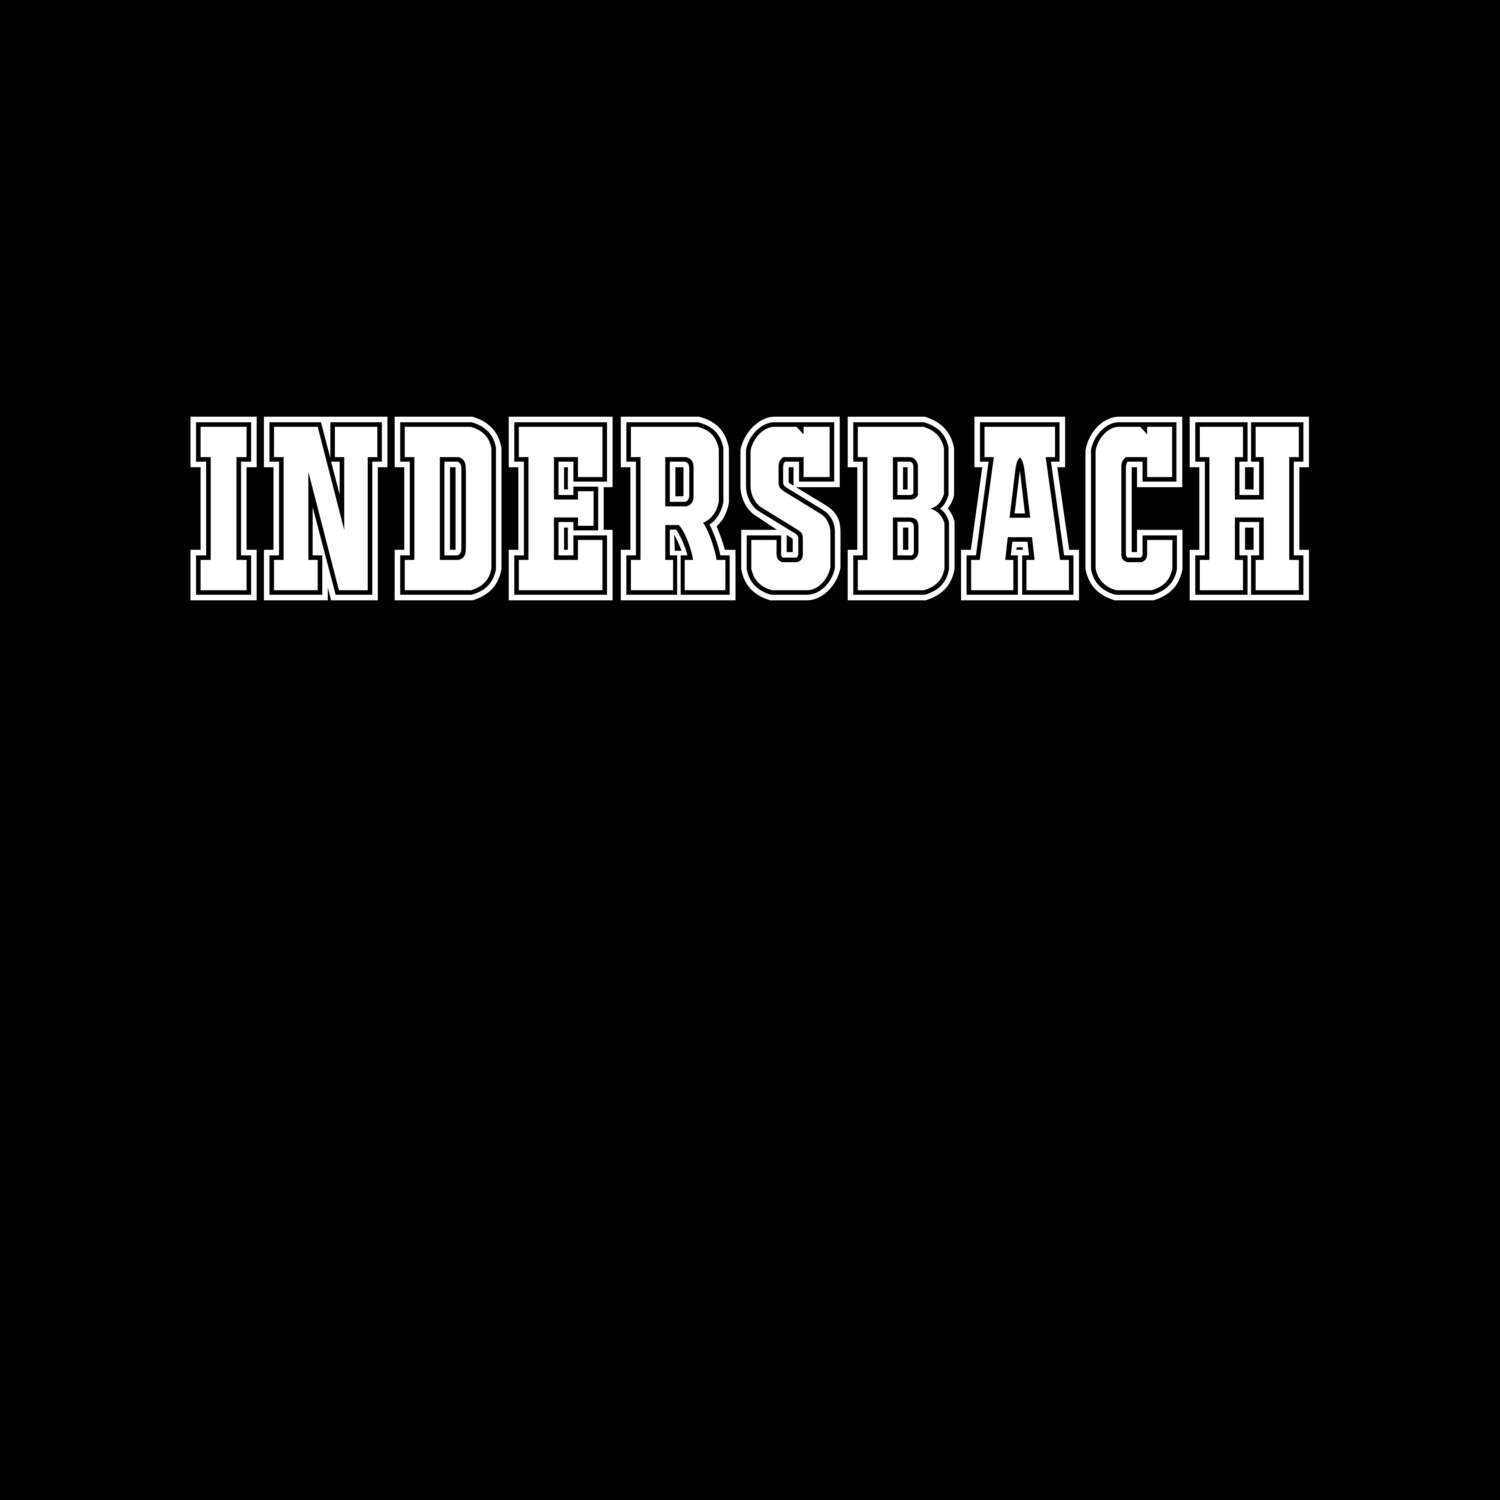 Indersbach T-Shirt »Classic«